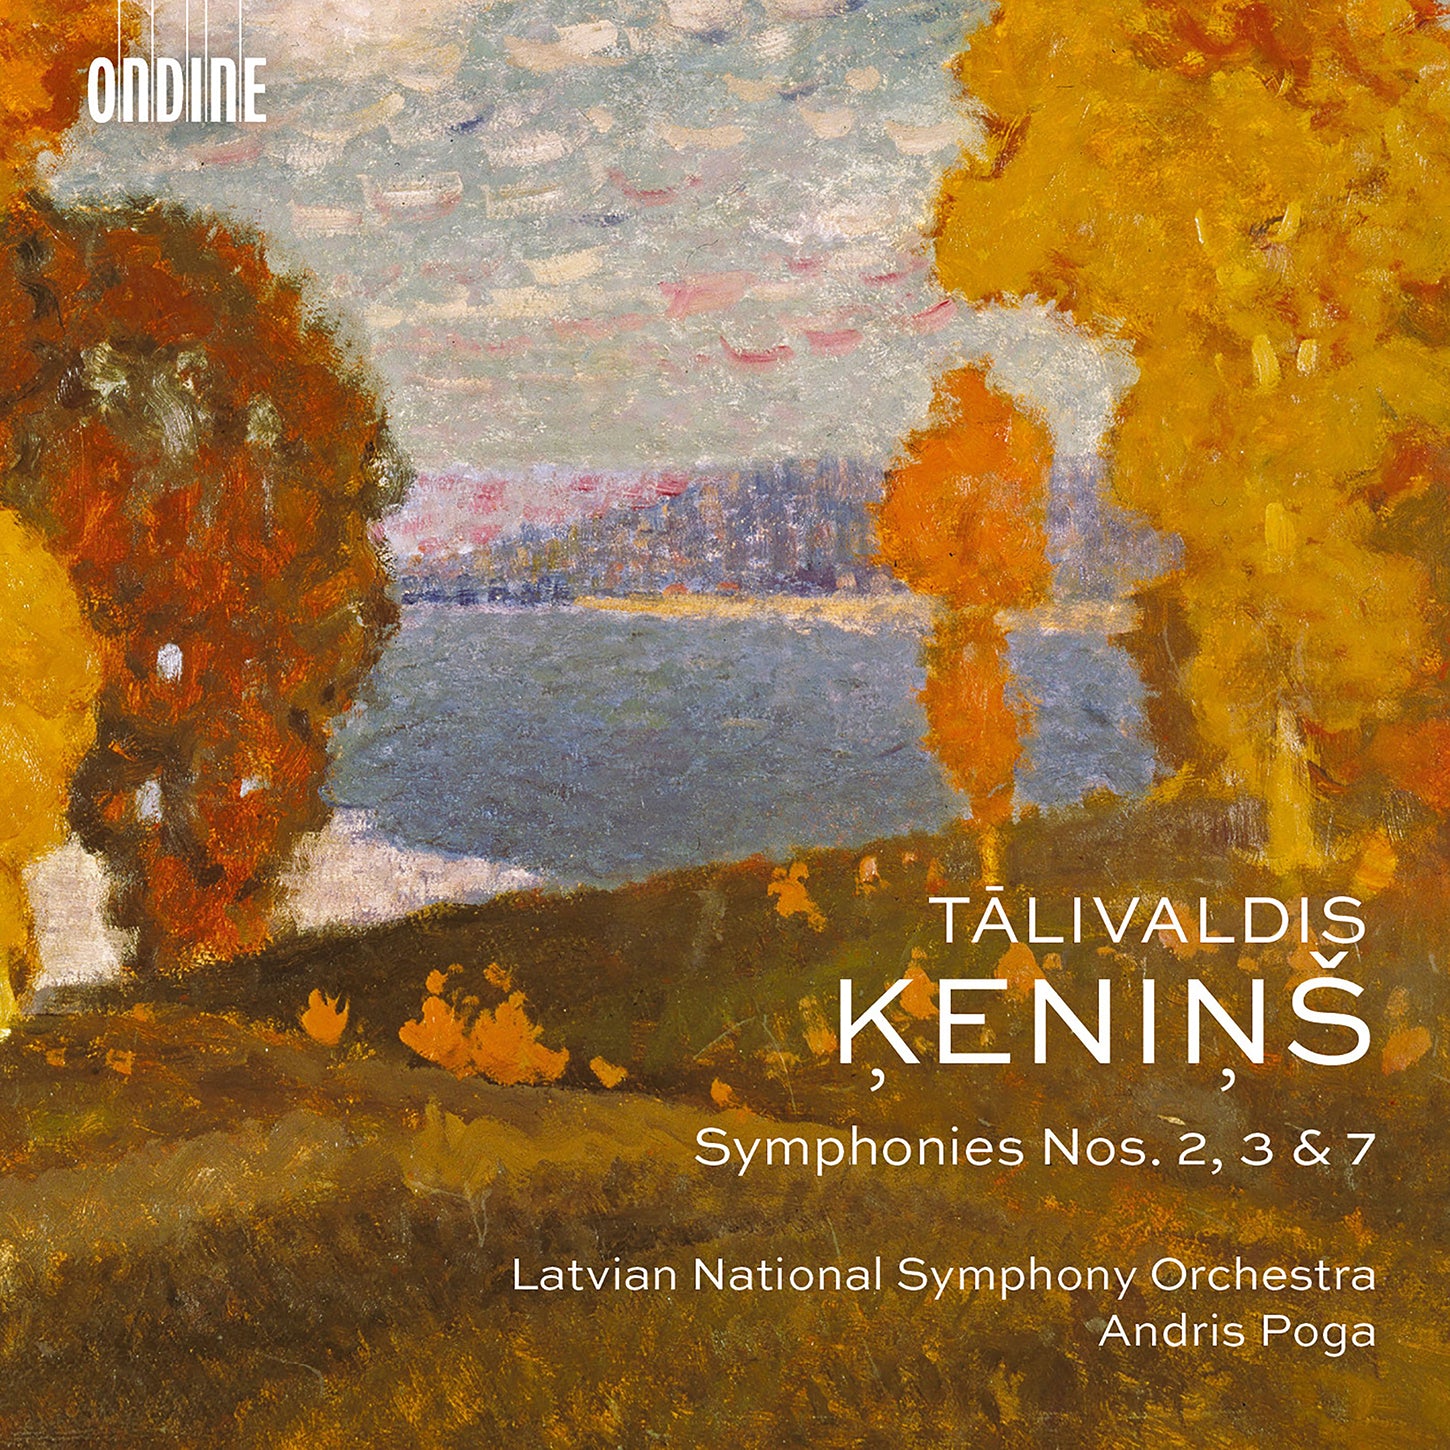 Kenins: Symphonies Nos. 2, 3 & 7 / Poga, Latvian National Symphony Orchestra